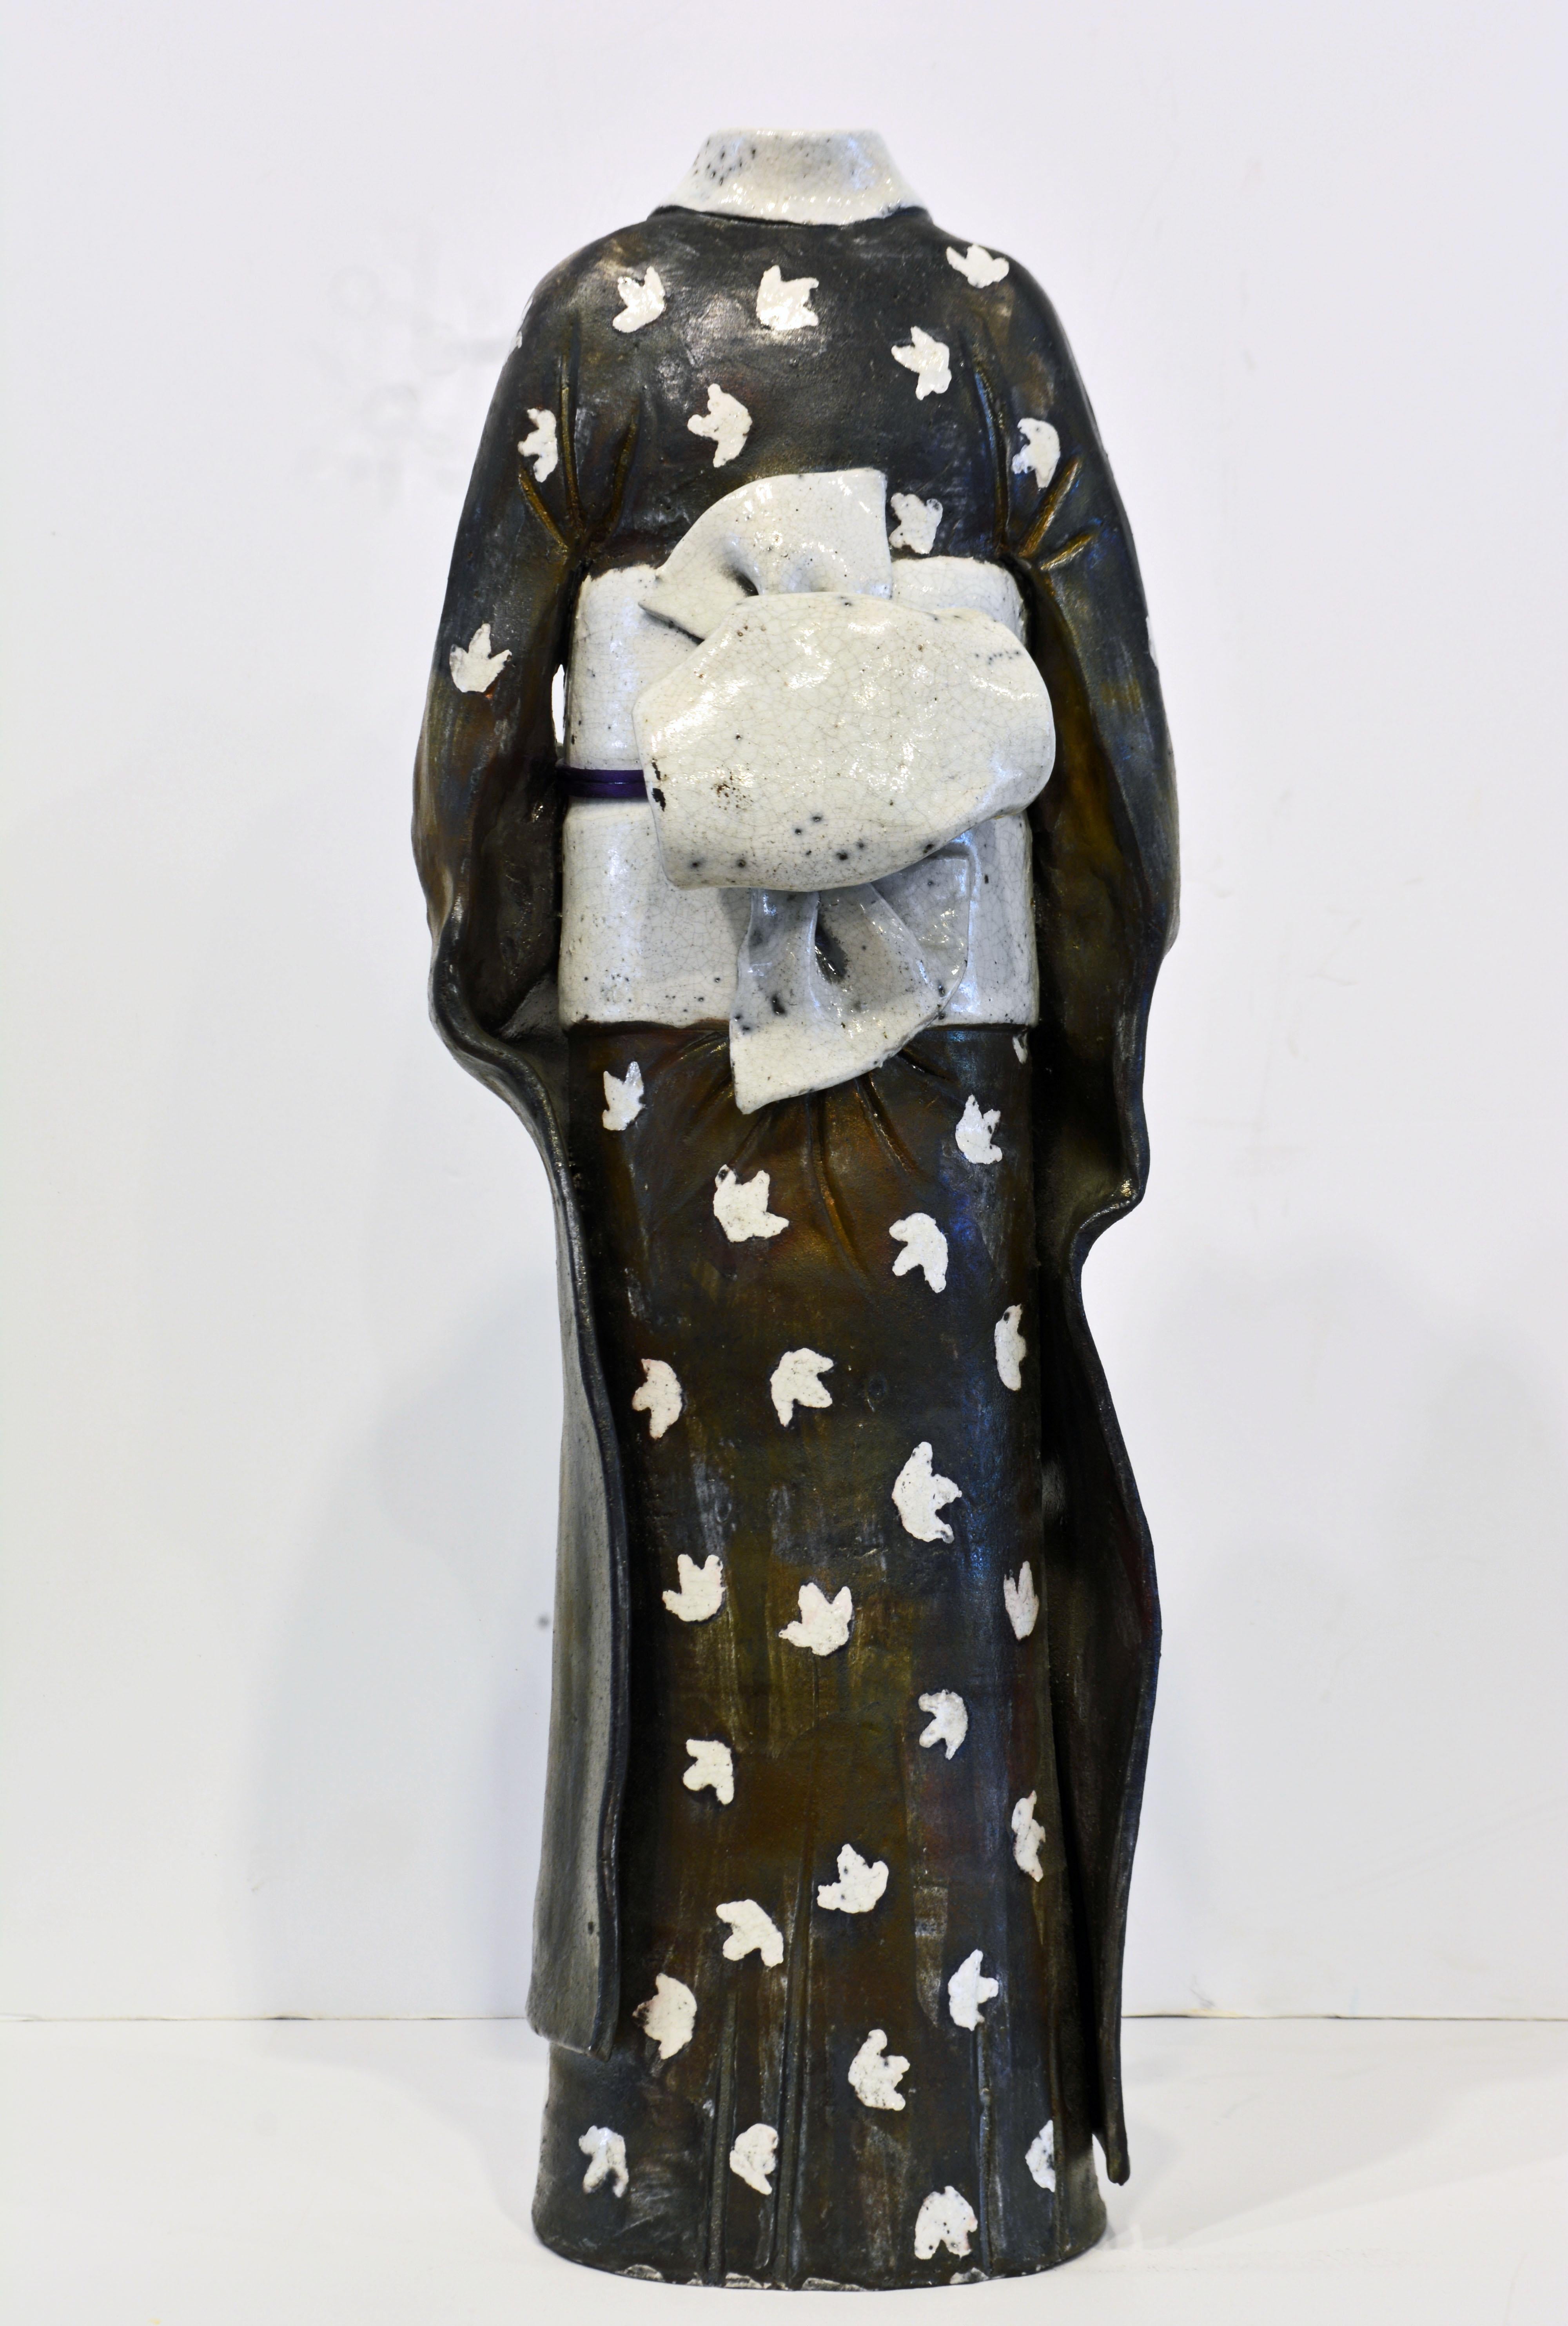 American Raku Style Ceramic Kimono Sculpture Signed by Kathryn Manry Quadra Island Artist